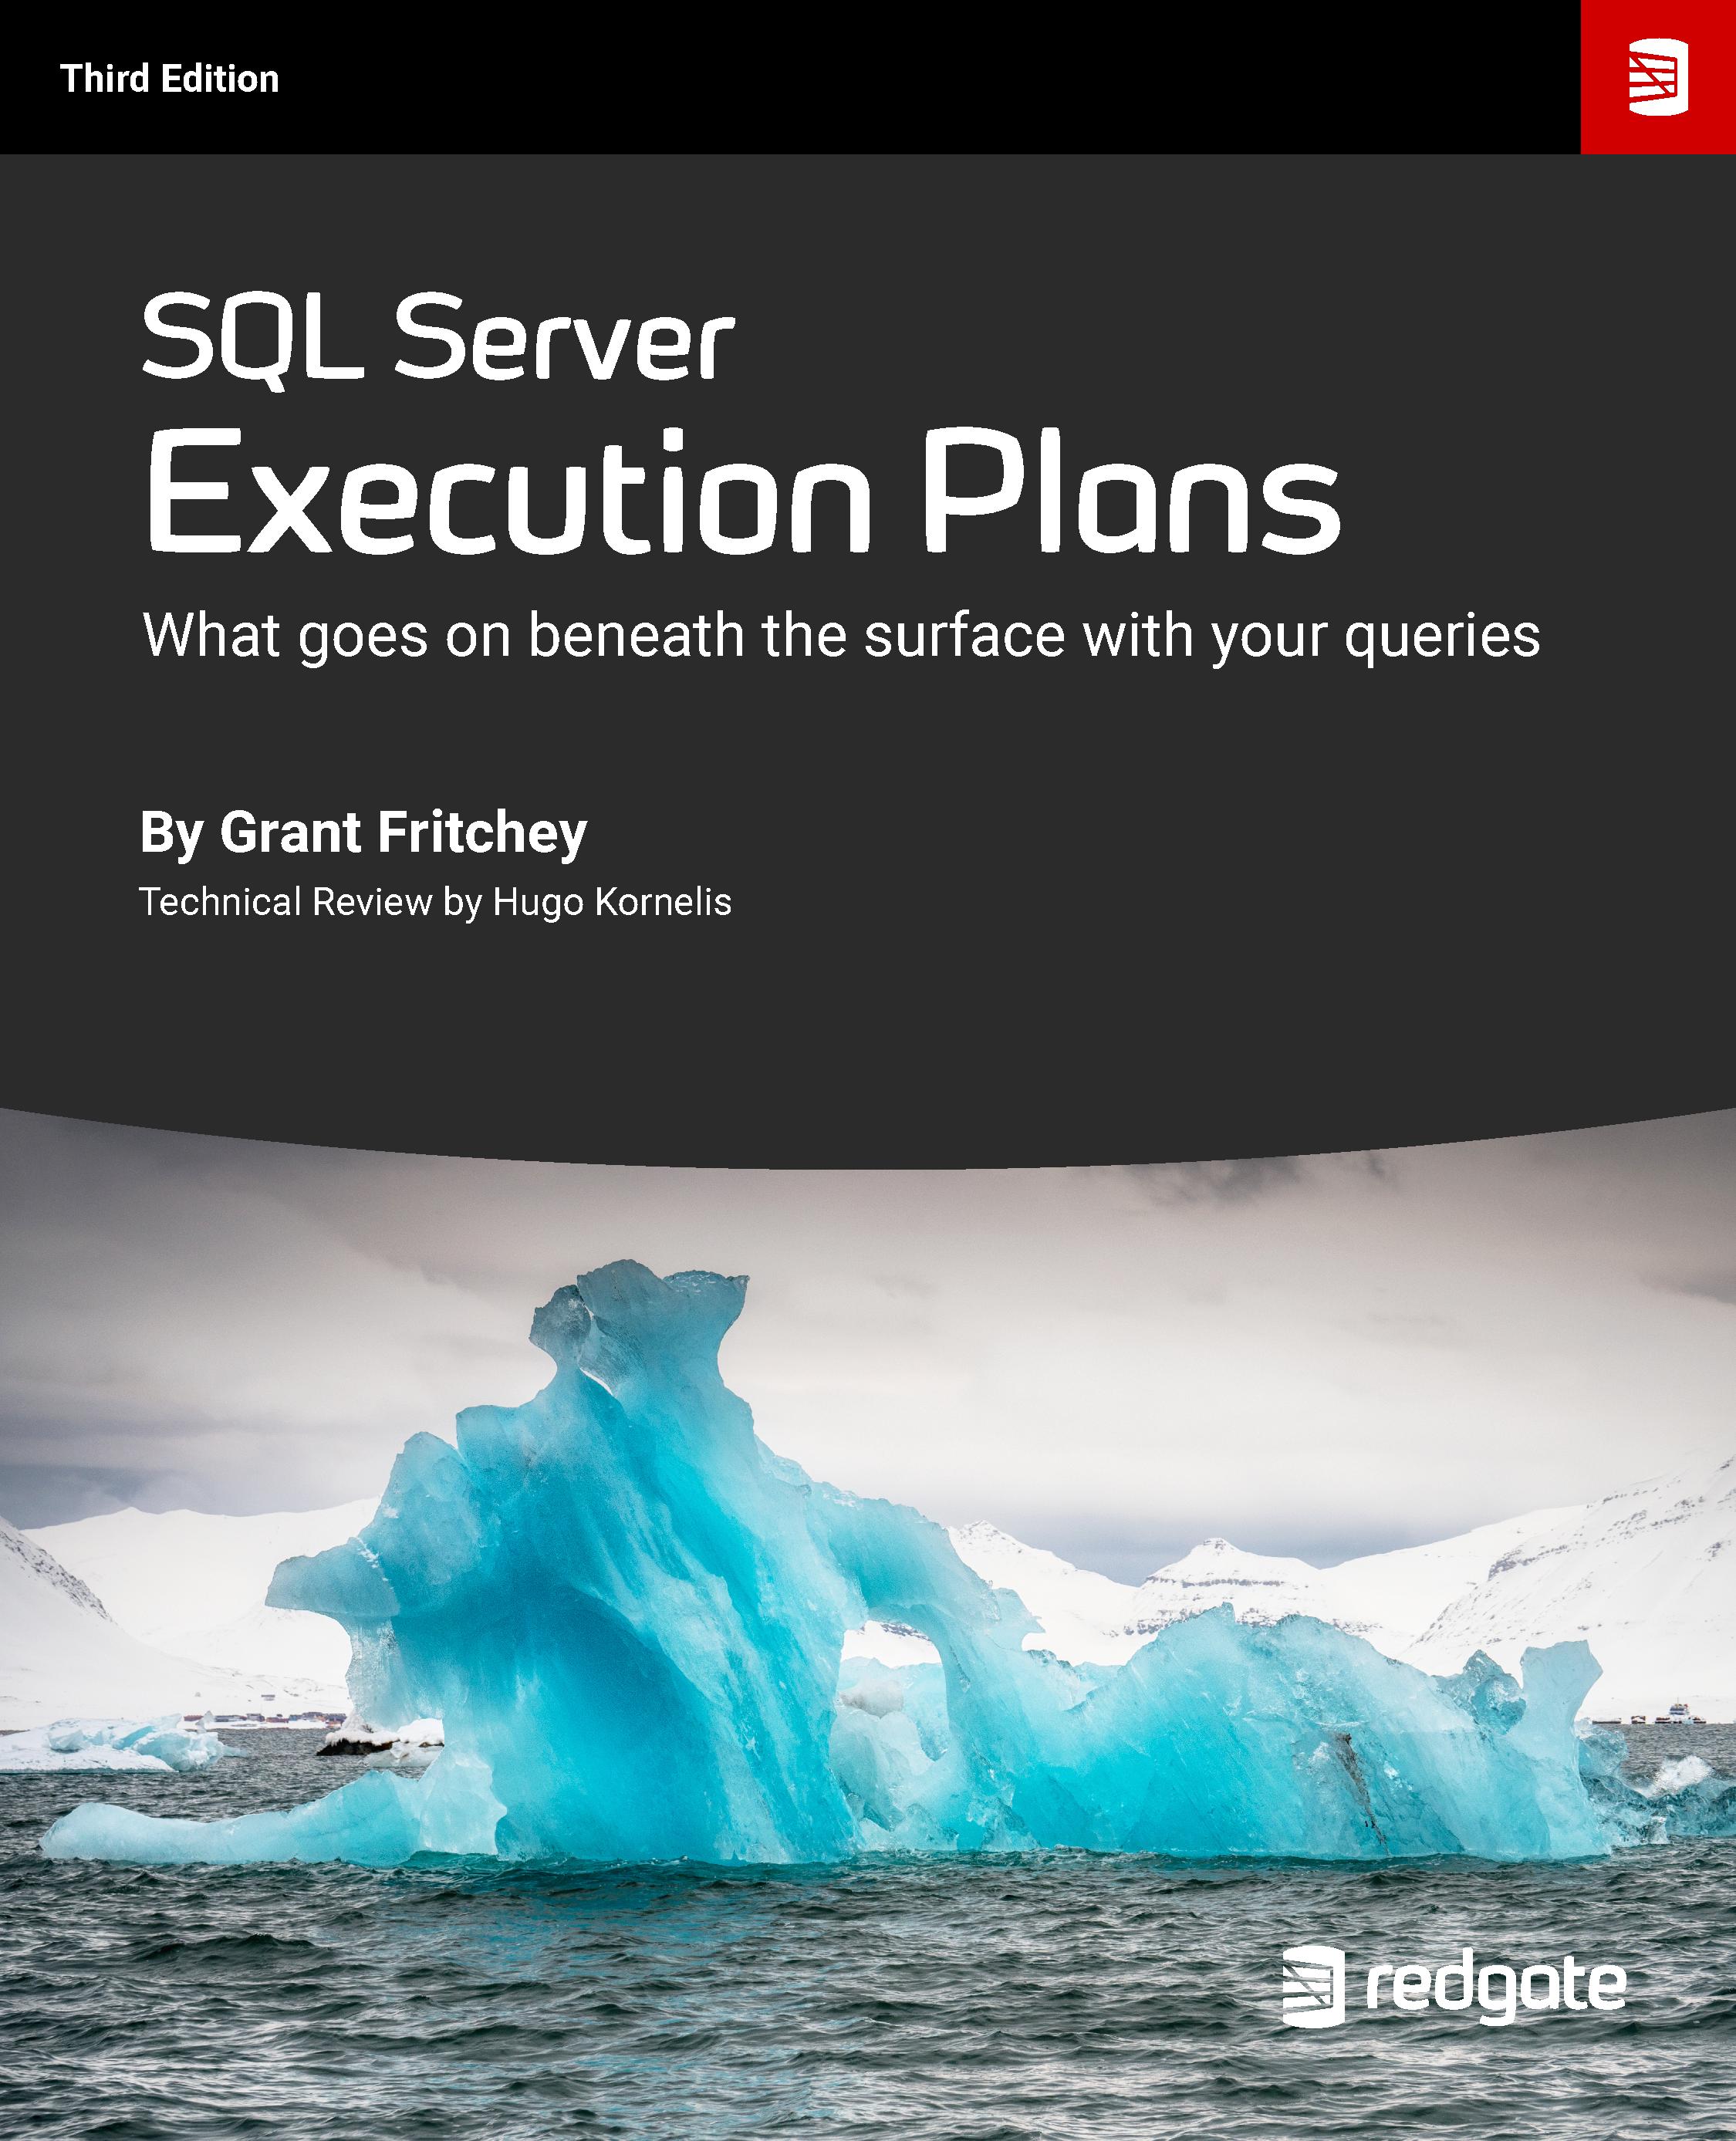 SQL Server Execution Plans, Third Edition